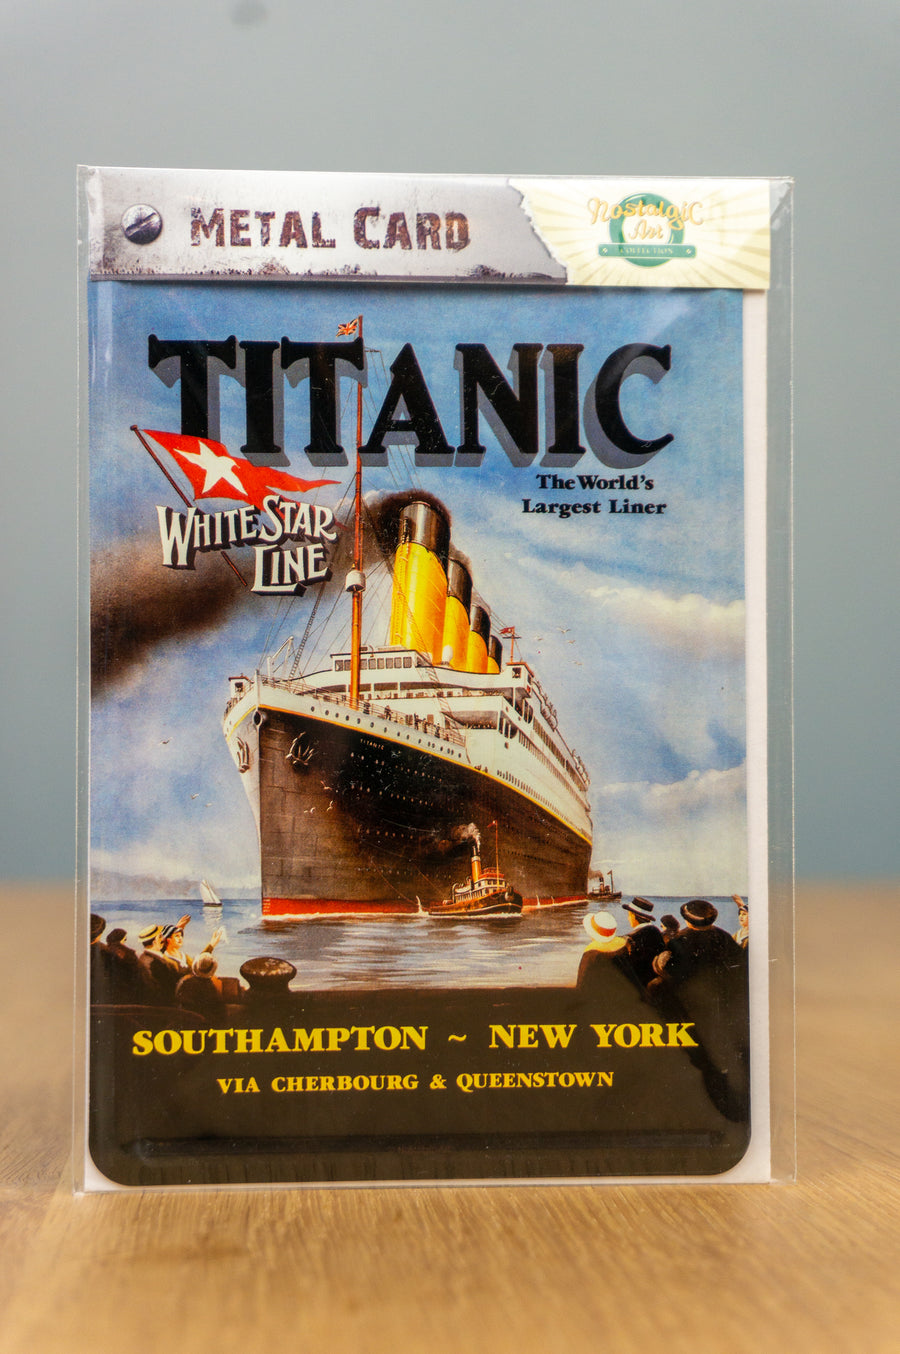 Metal Card - Titanic - White star line (Postcard)